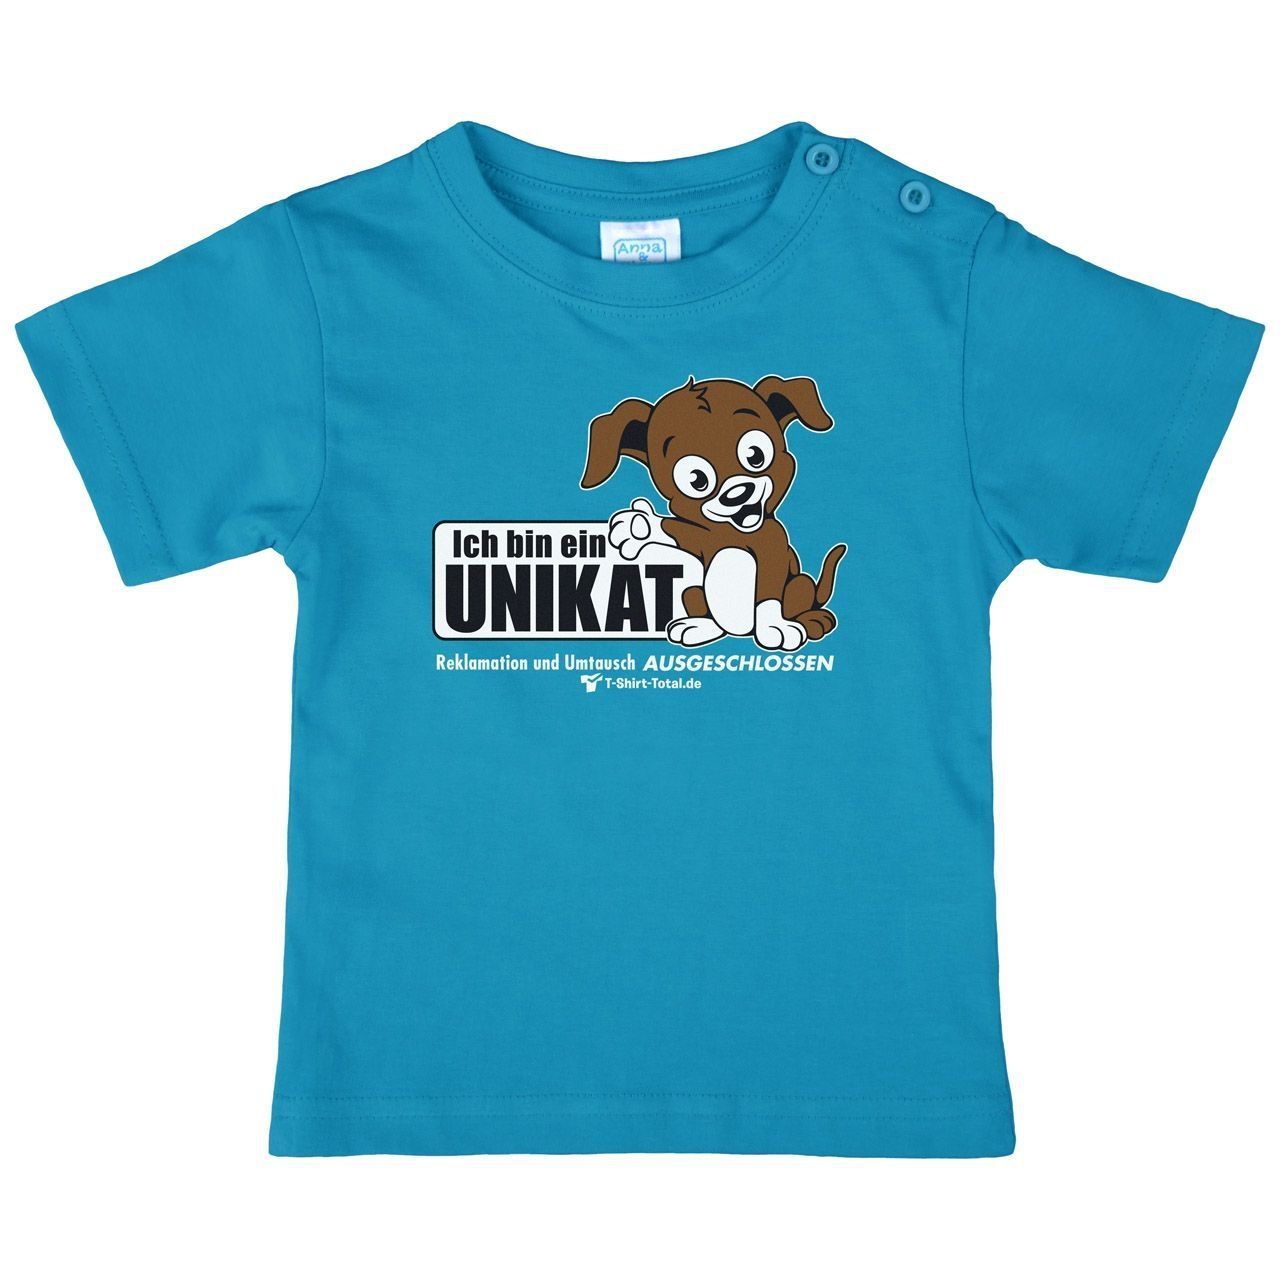 Unikat Kinder T-Shirt türkis 98